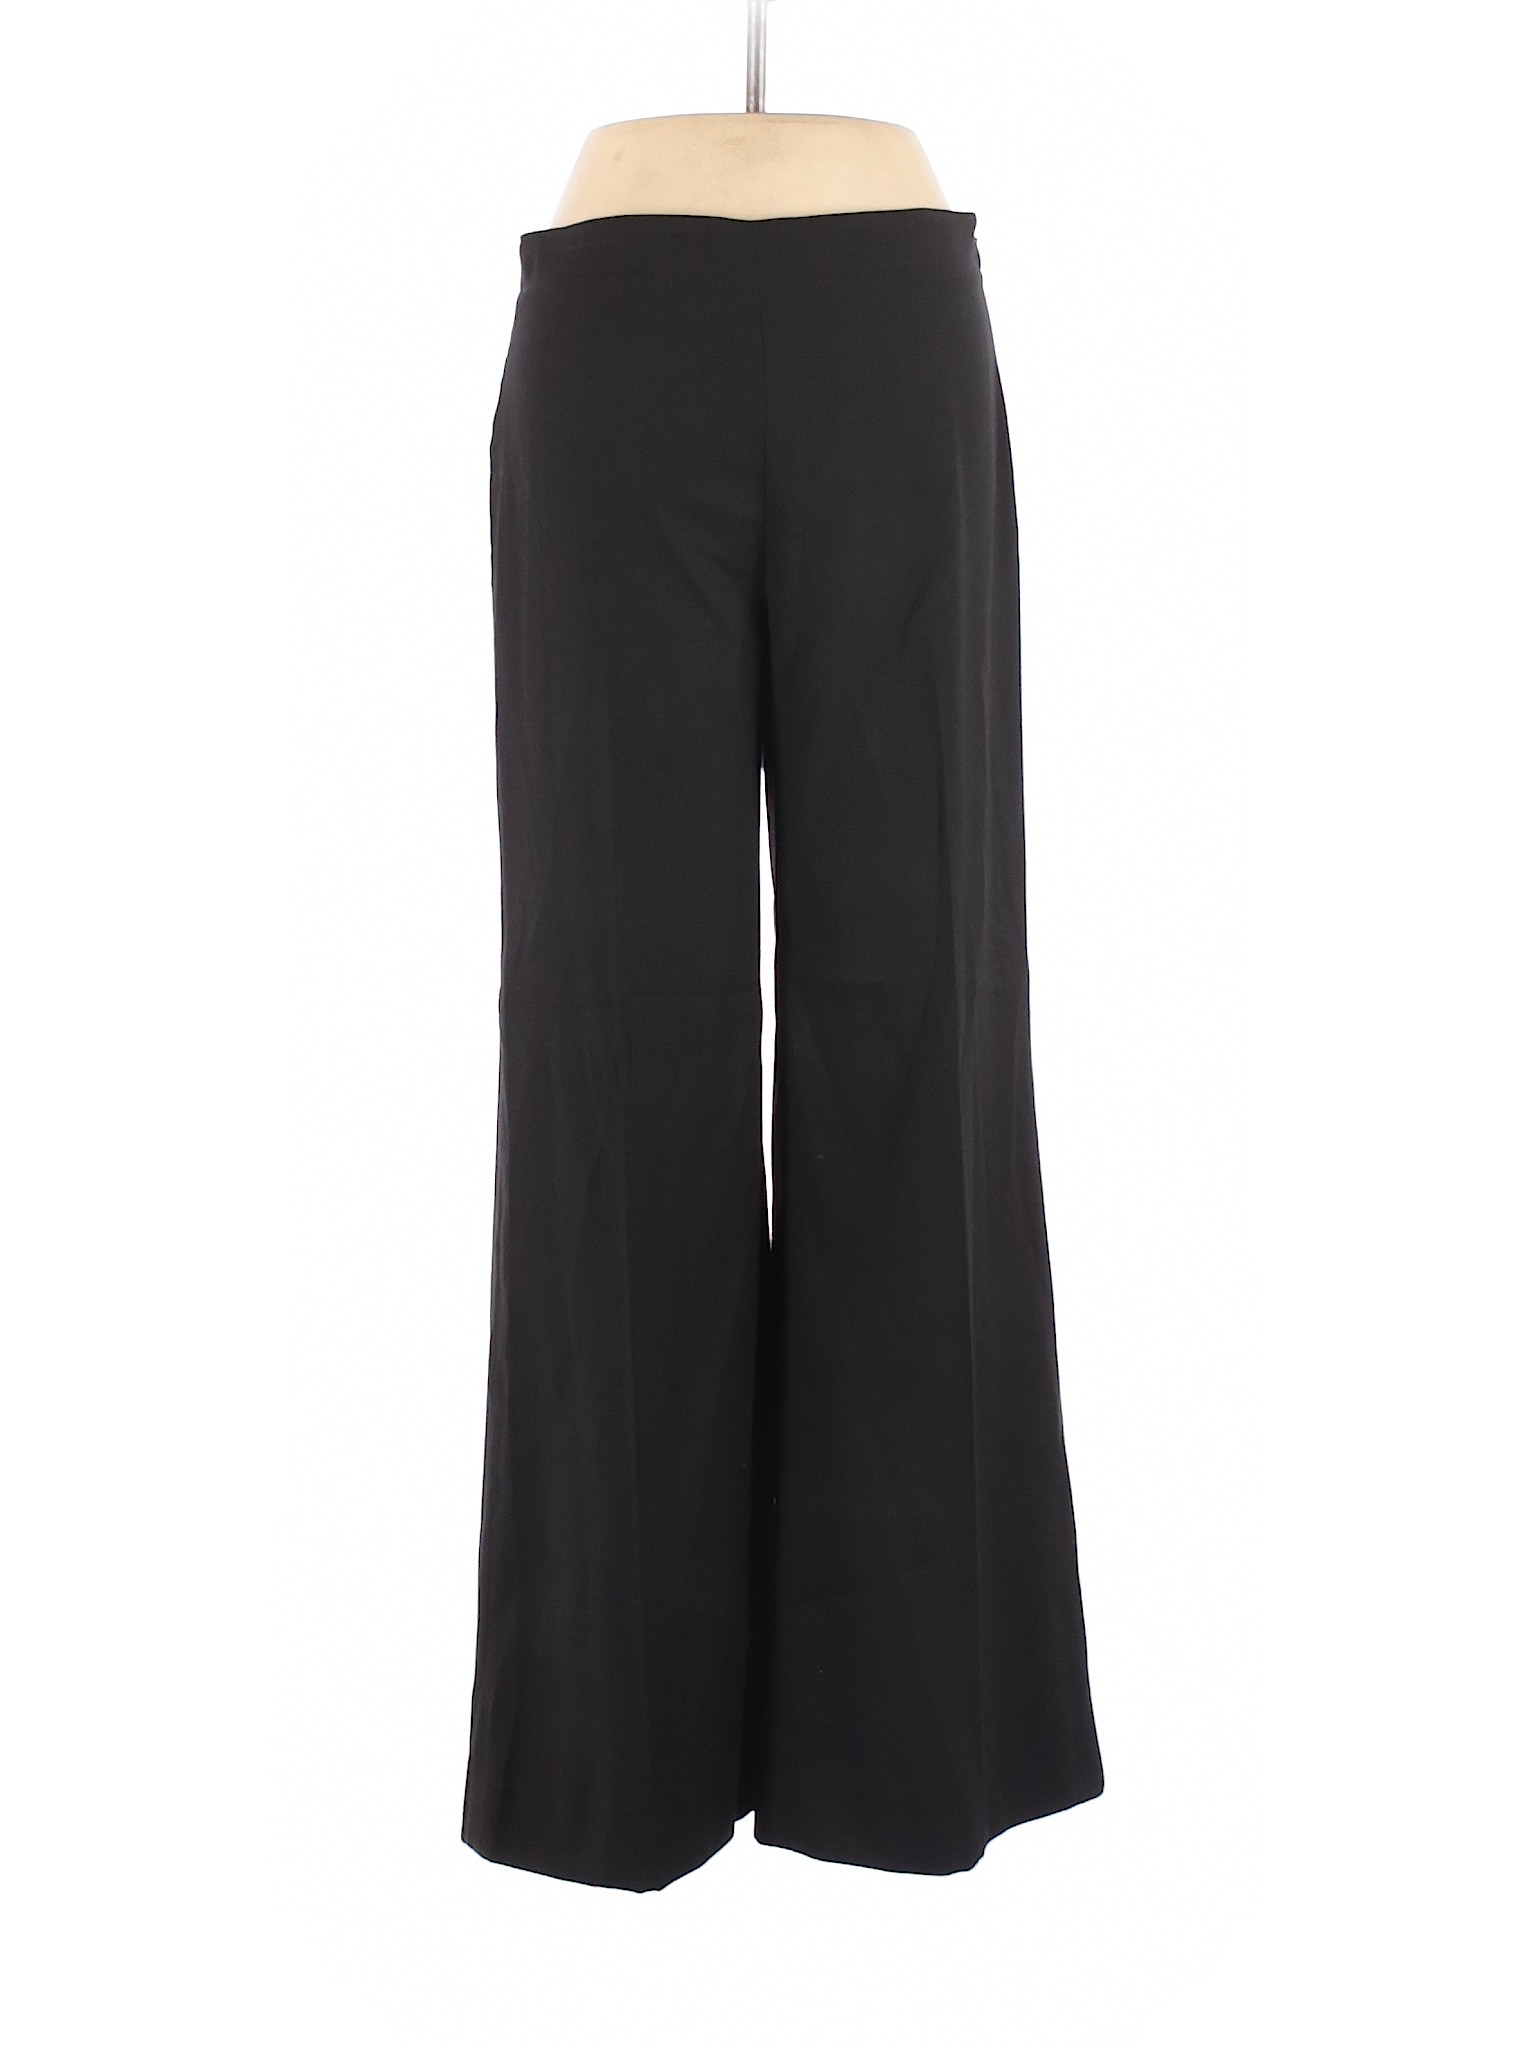 Cabiria Women Black Dress Pants 4 | eBay